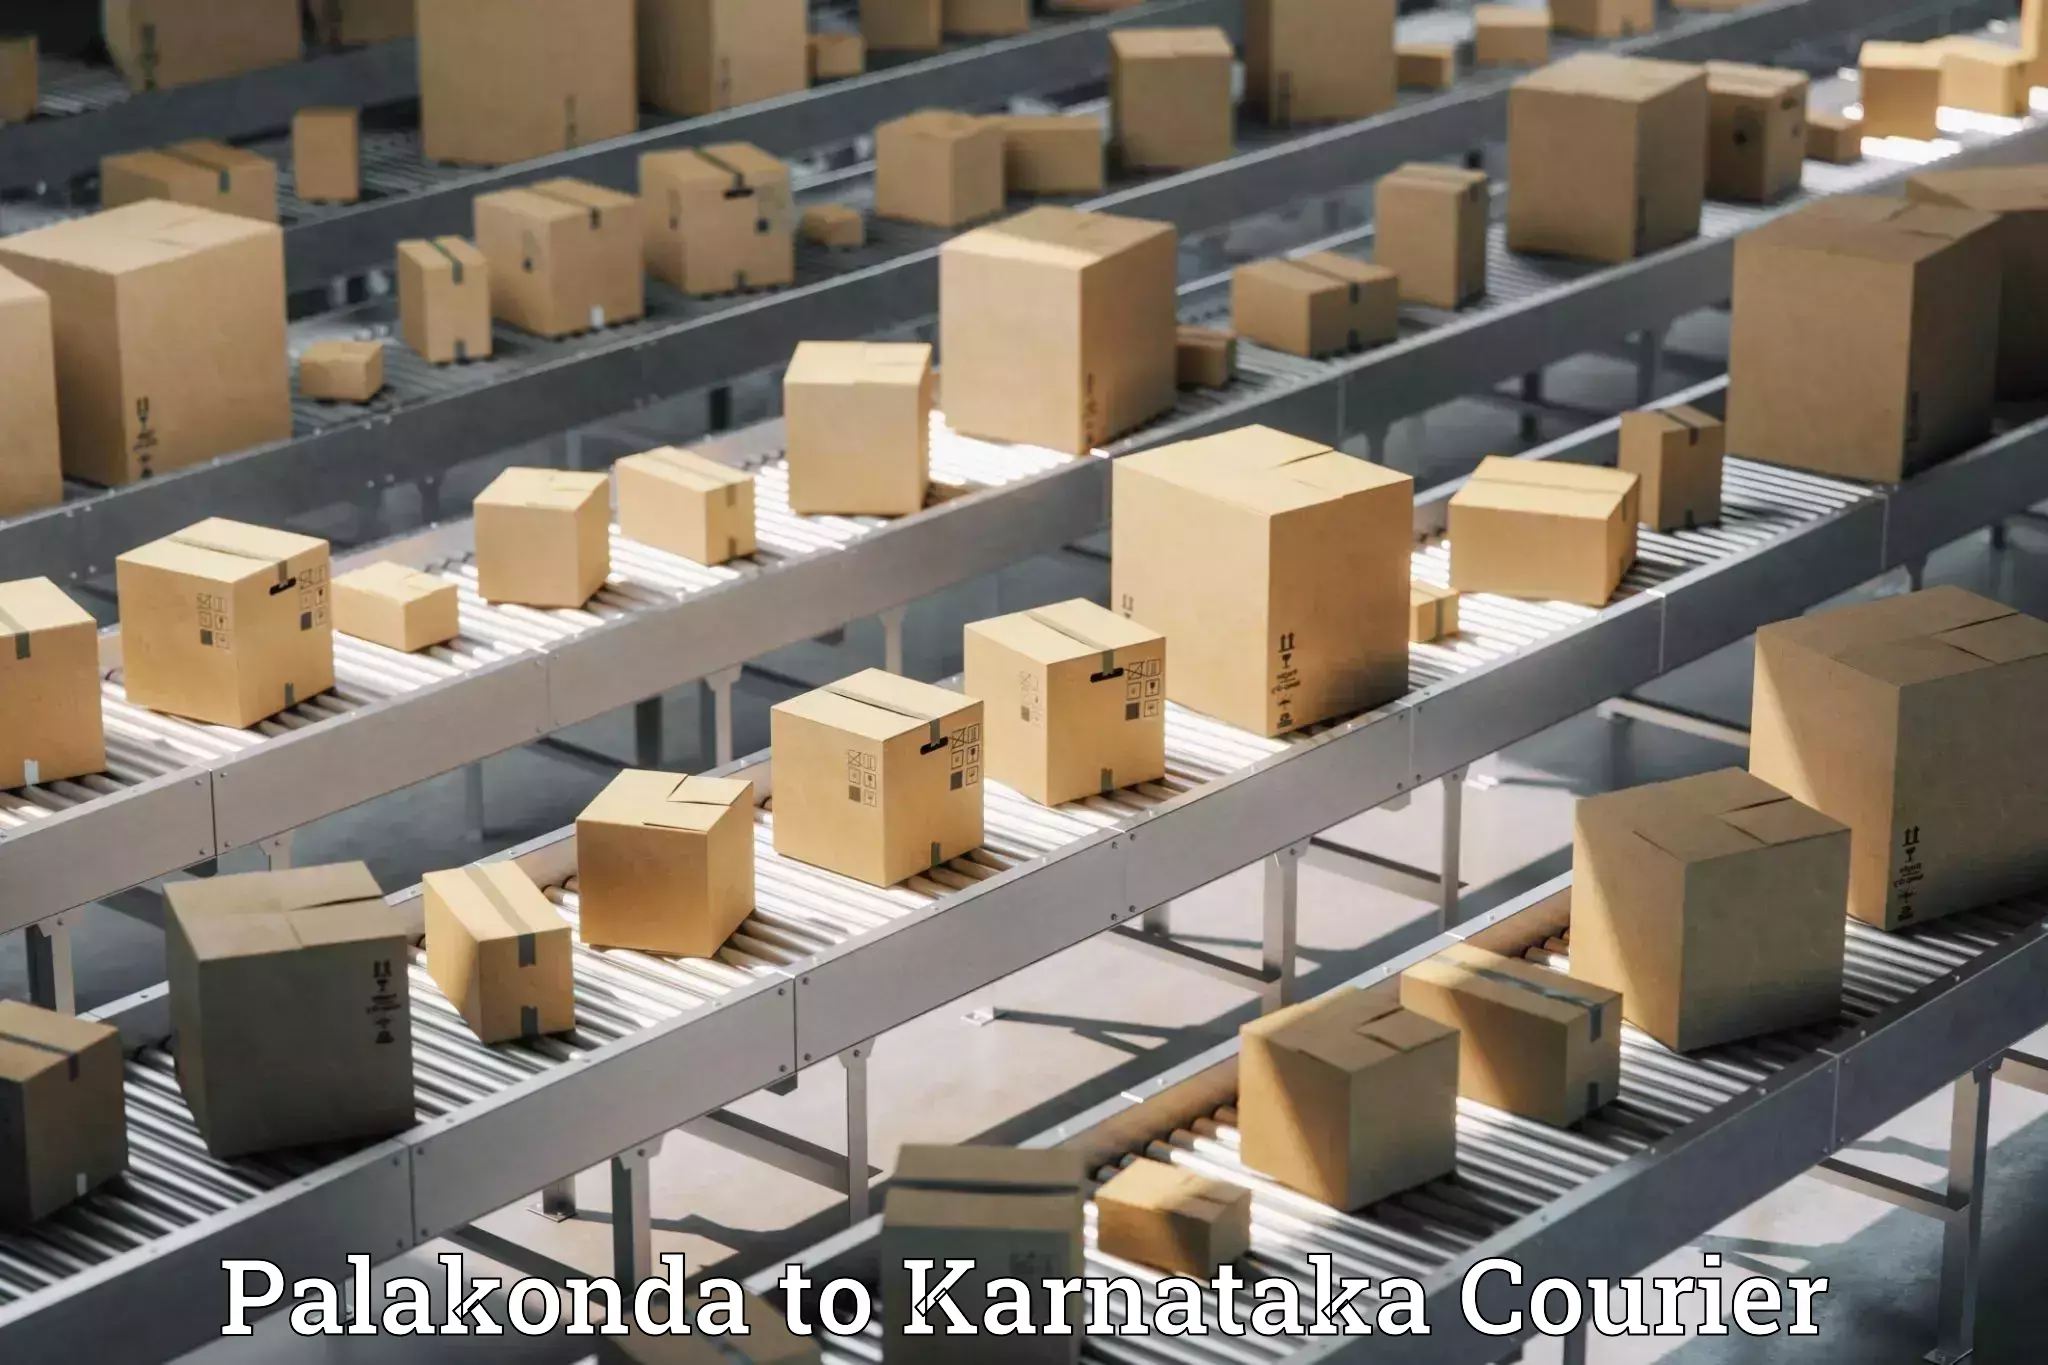 Digital courier platforms Palakonda to Mangalore Port